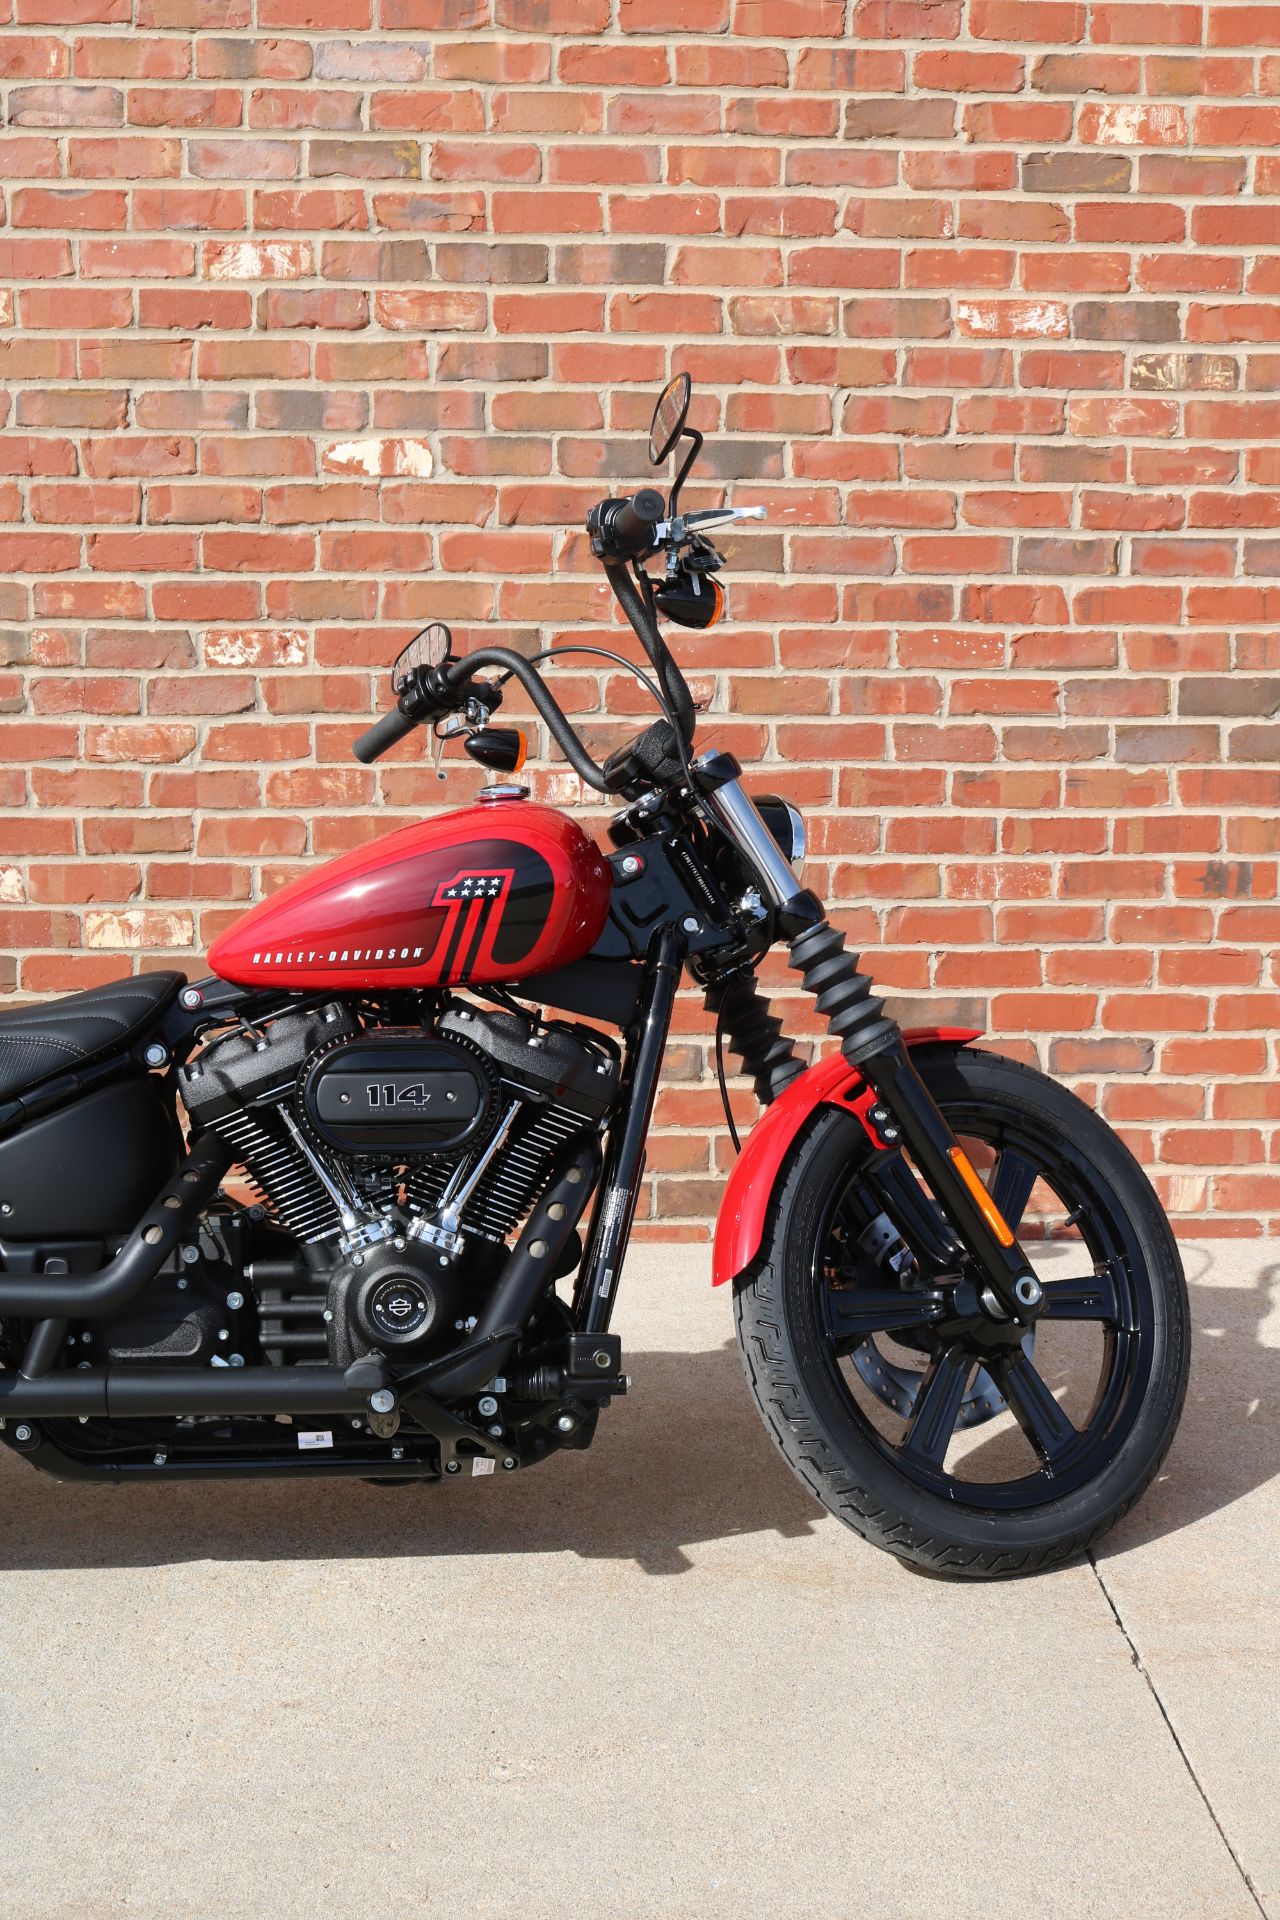 2022 Harley-Davidson Street Bob® 114 in Ames, Iowa - Photo 4